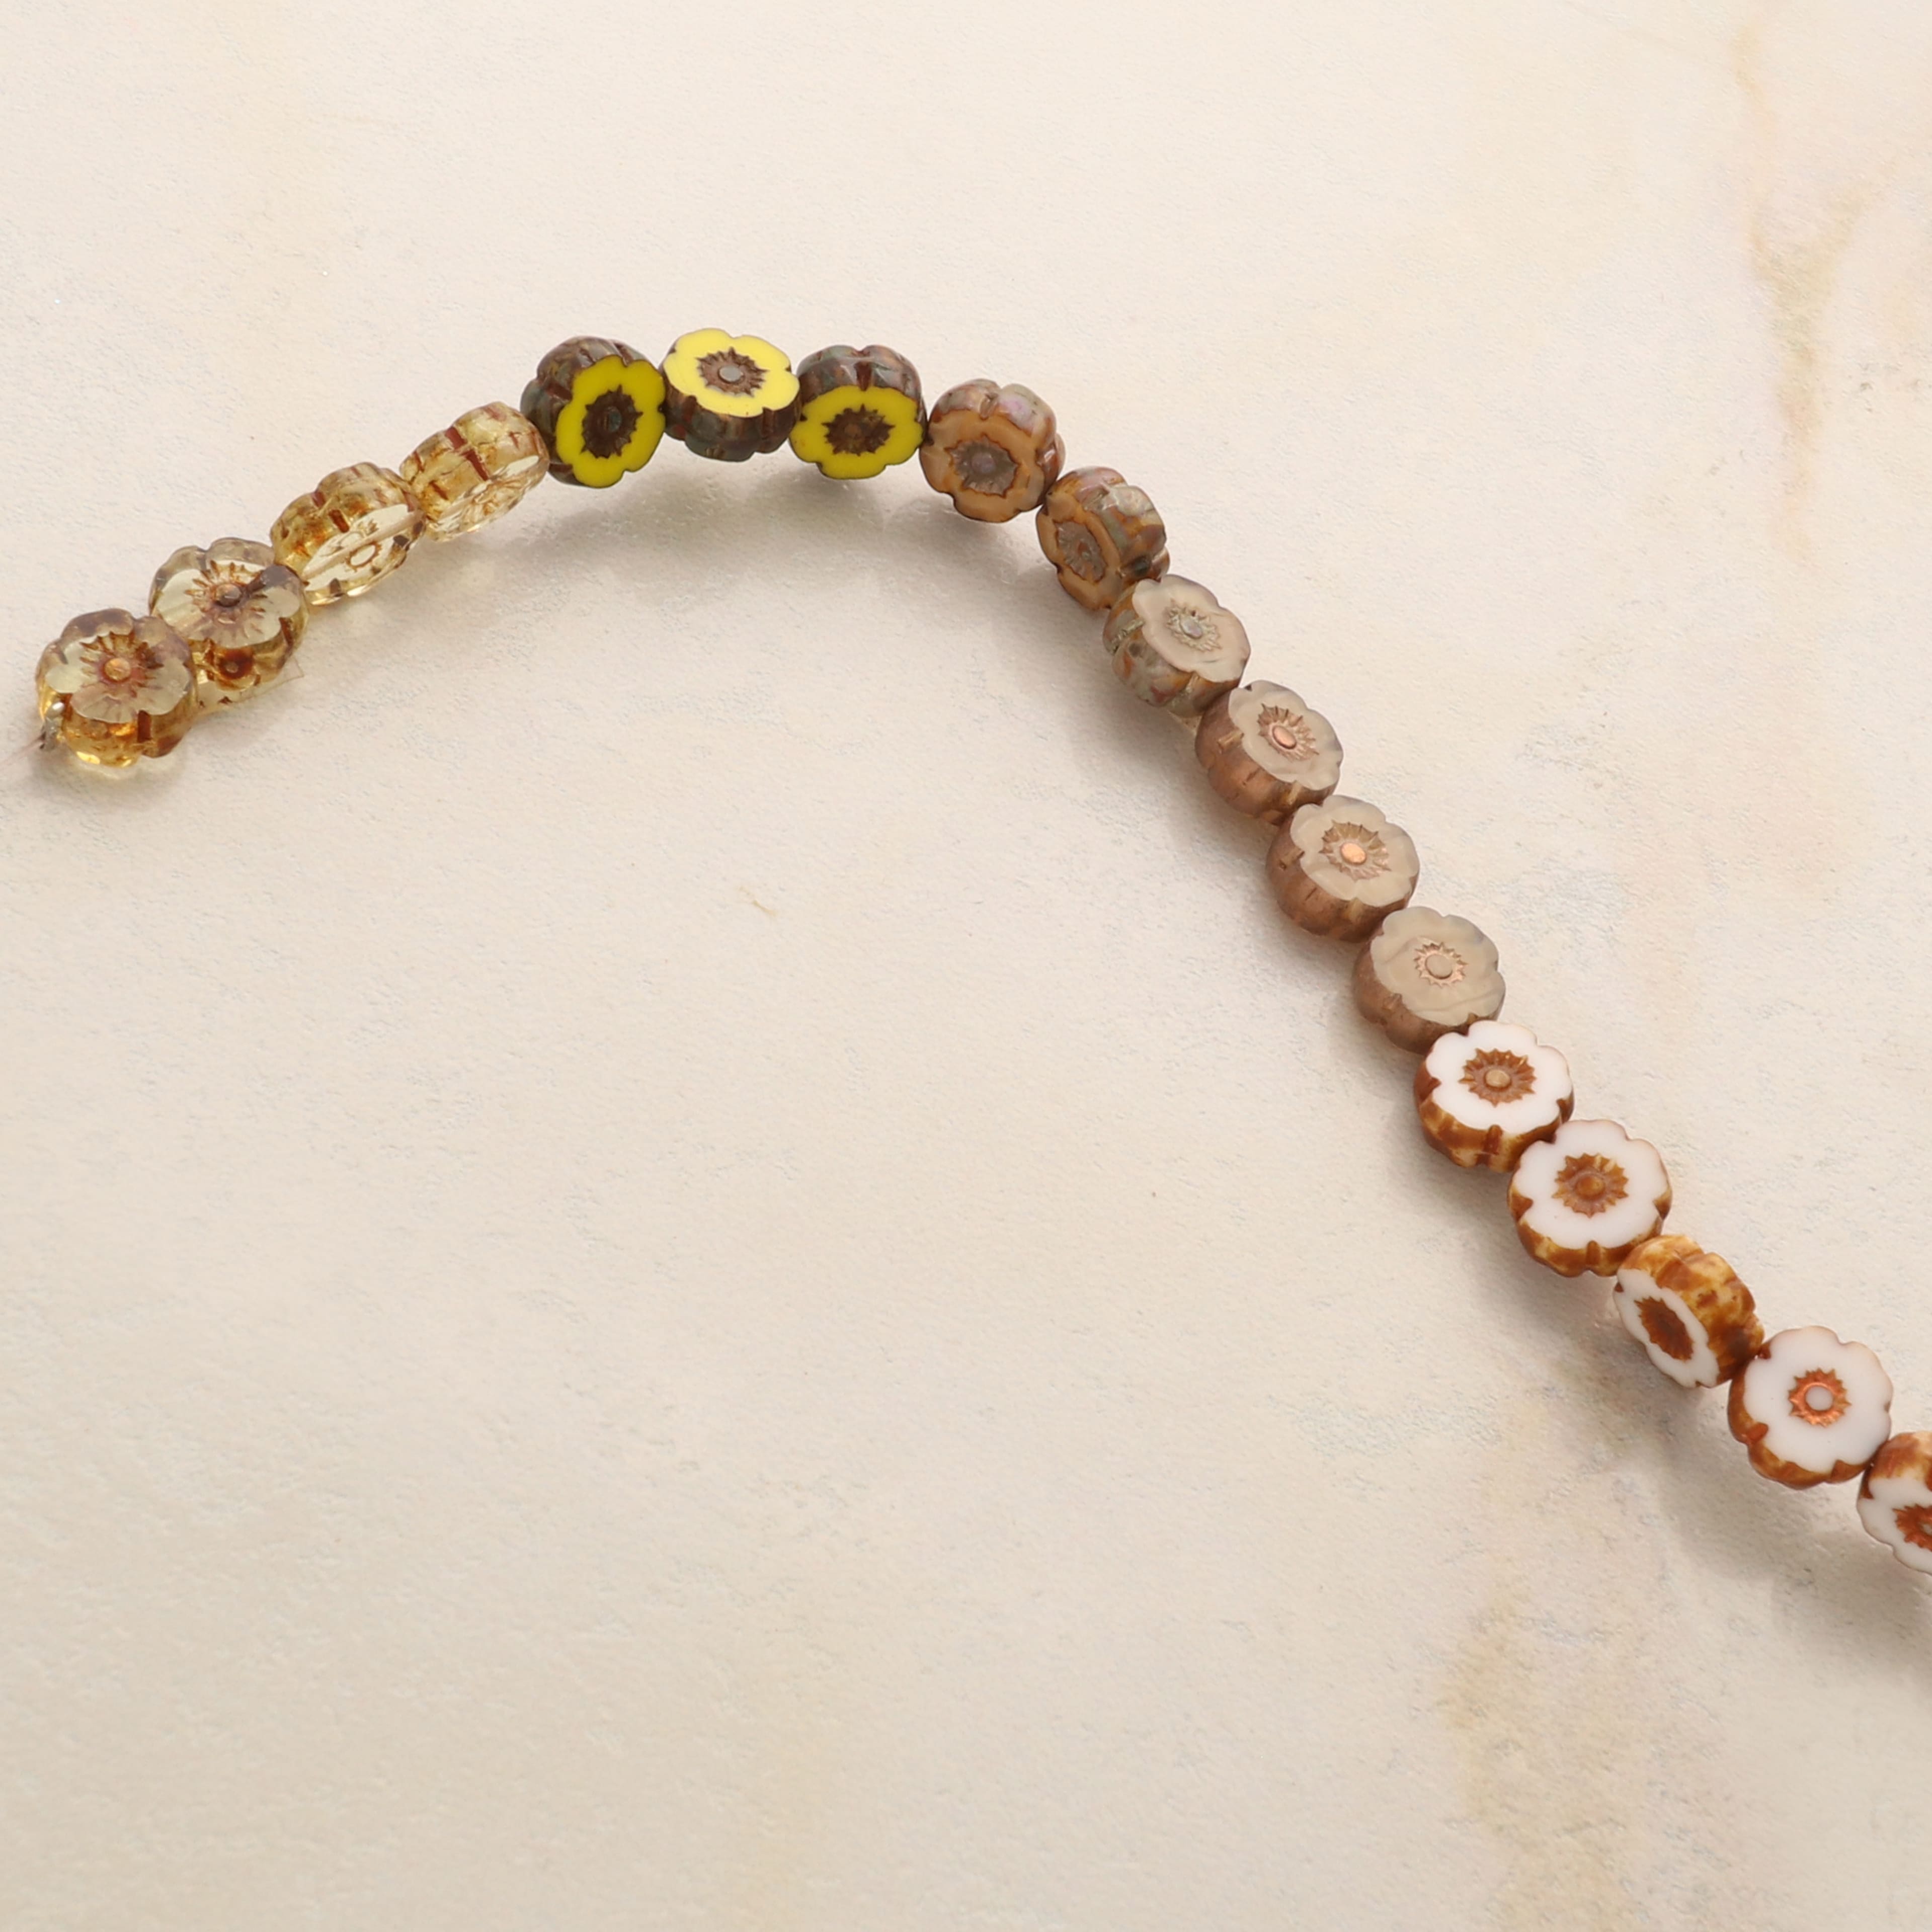 6 Packs: 22 ct. (132 total) Hibiscus Fall Czech Glass Flower Beads, 8.6mm by Bead Landing&#x2122;